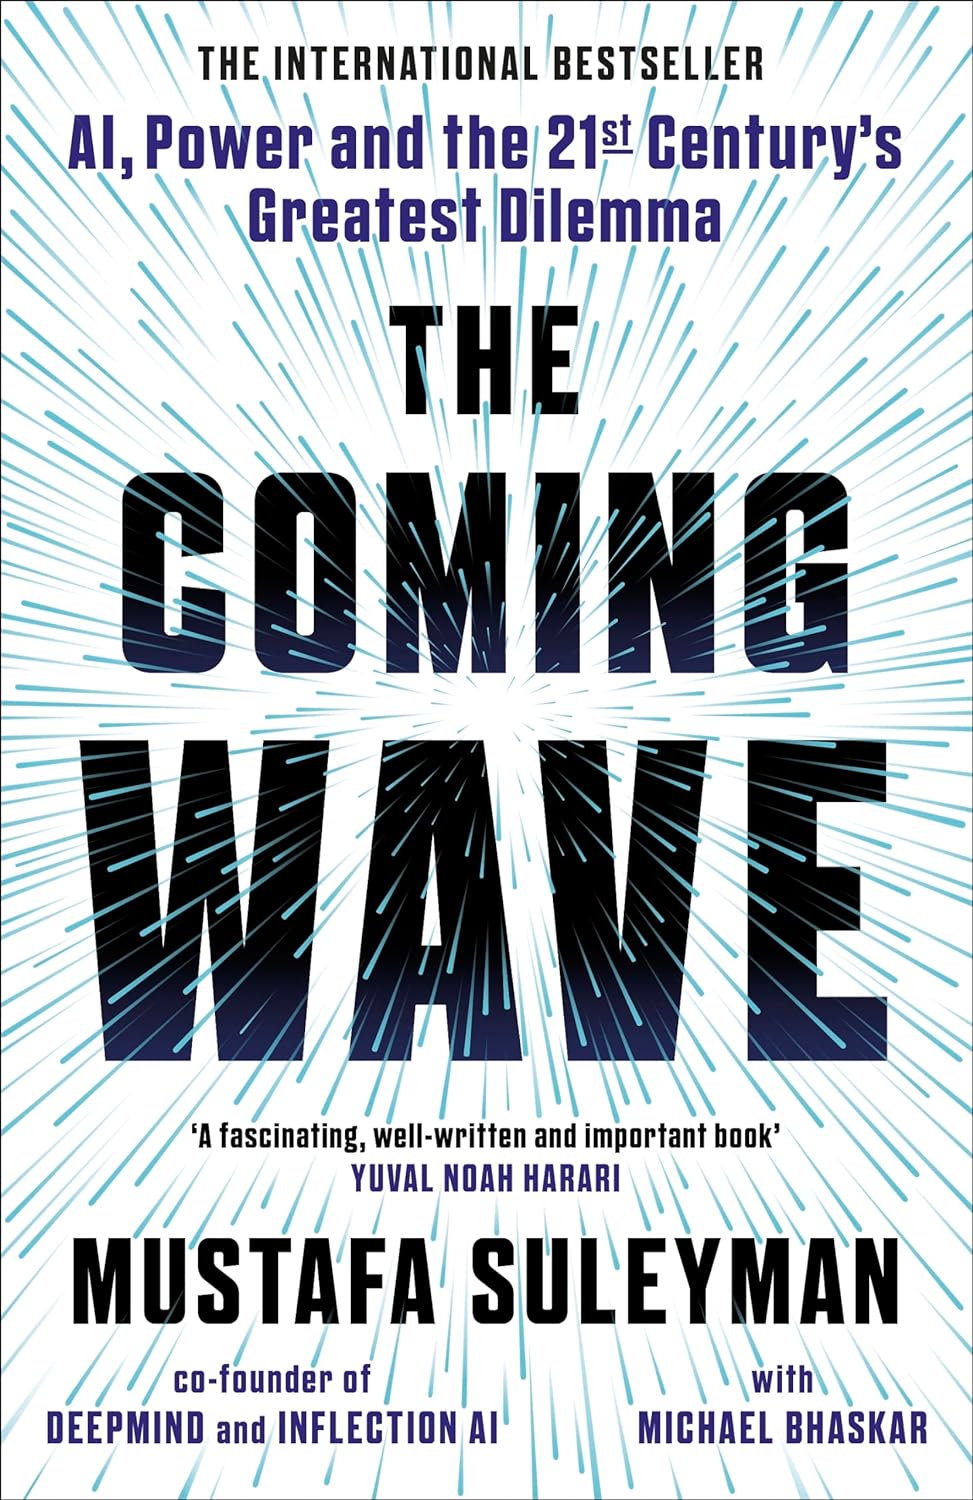 The Coming Wave by Mustafa Suleyman (Author), Michael Bhaskar (Author)